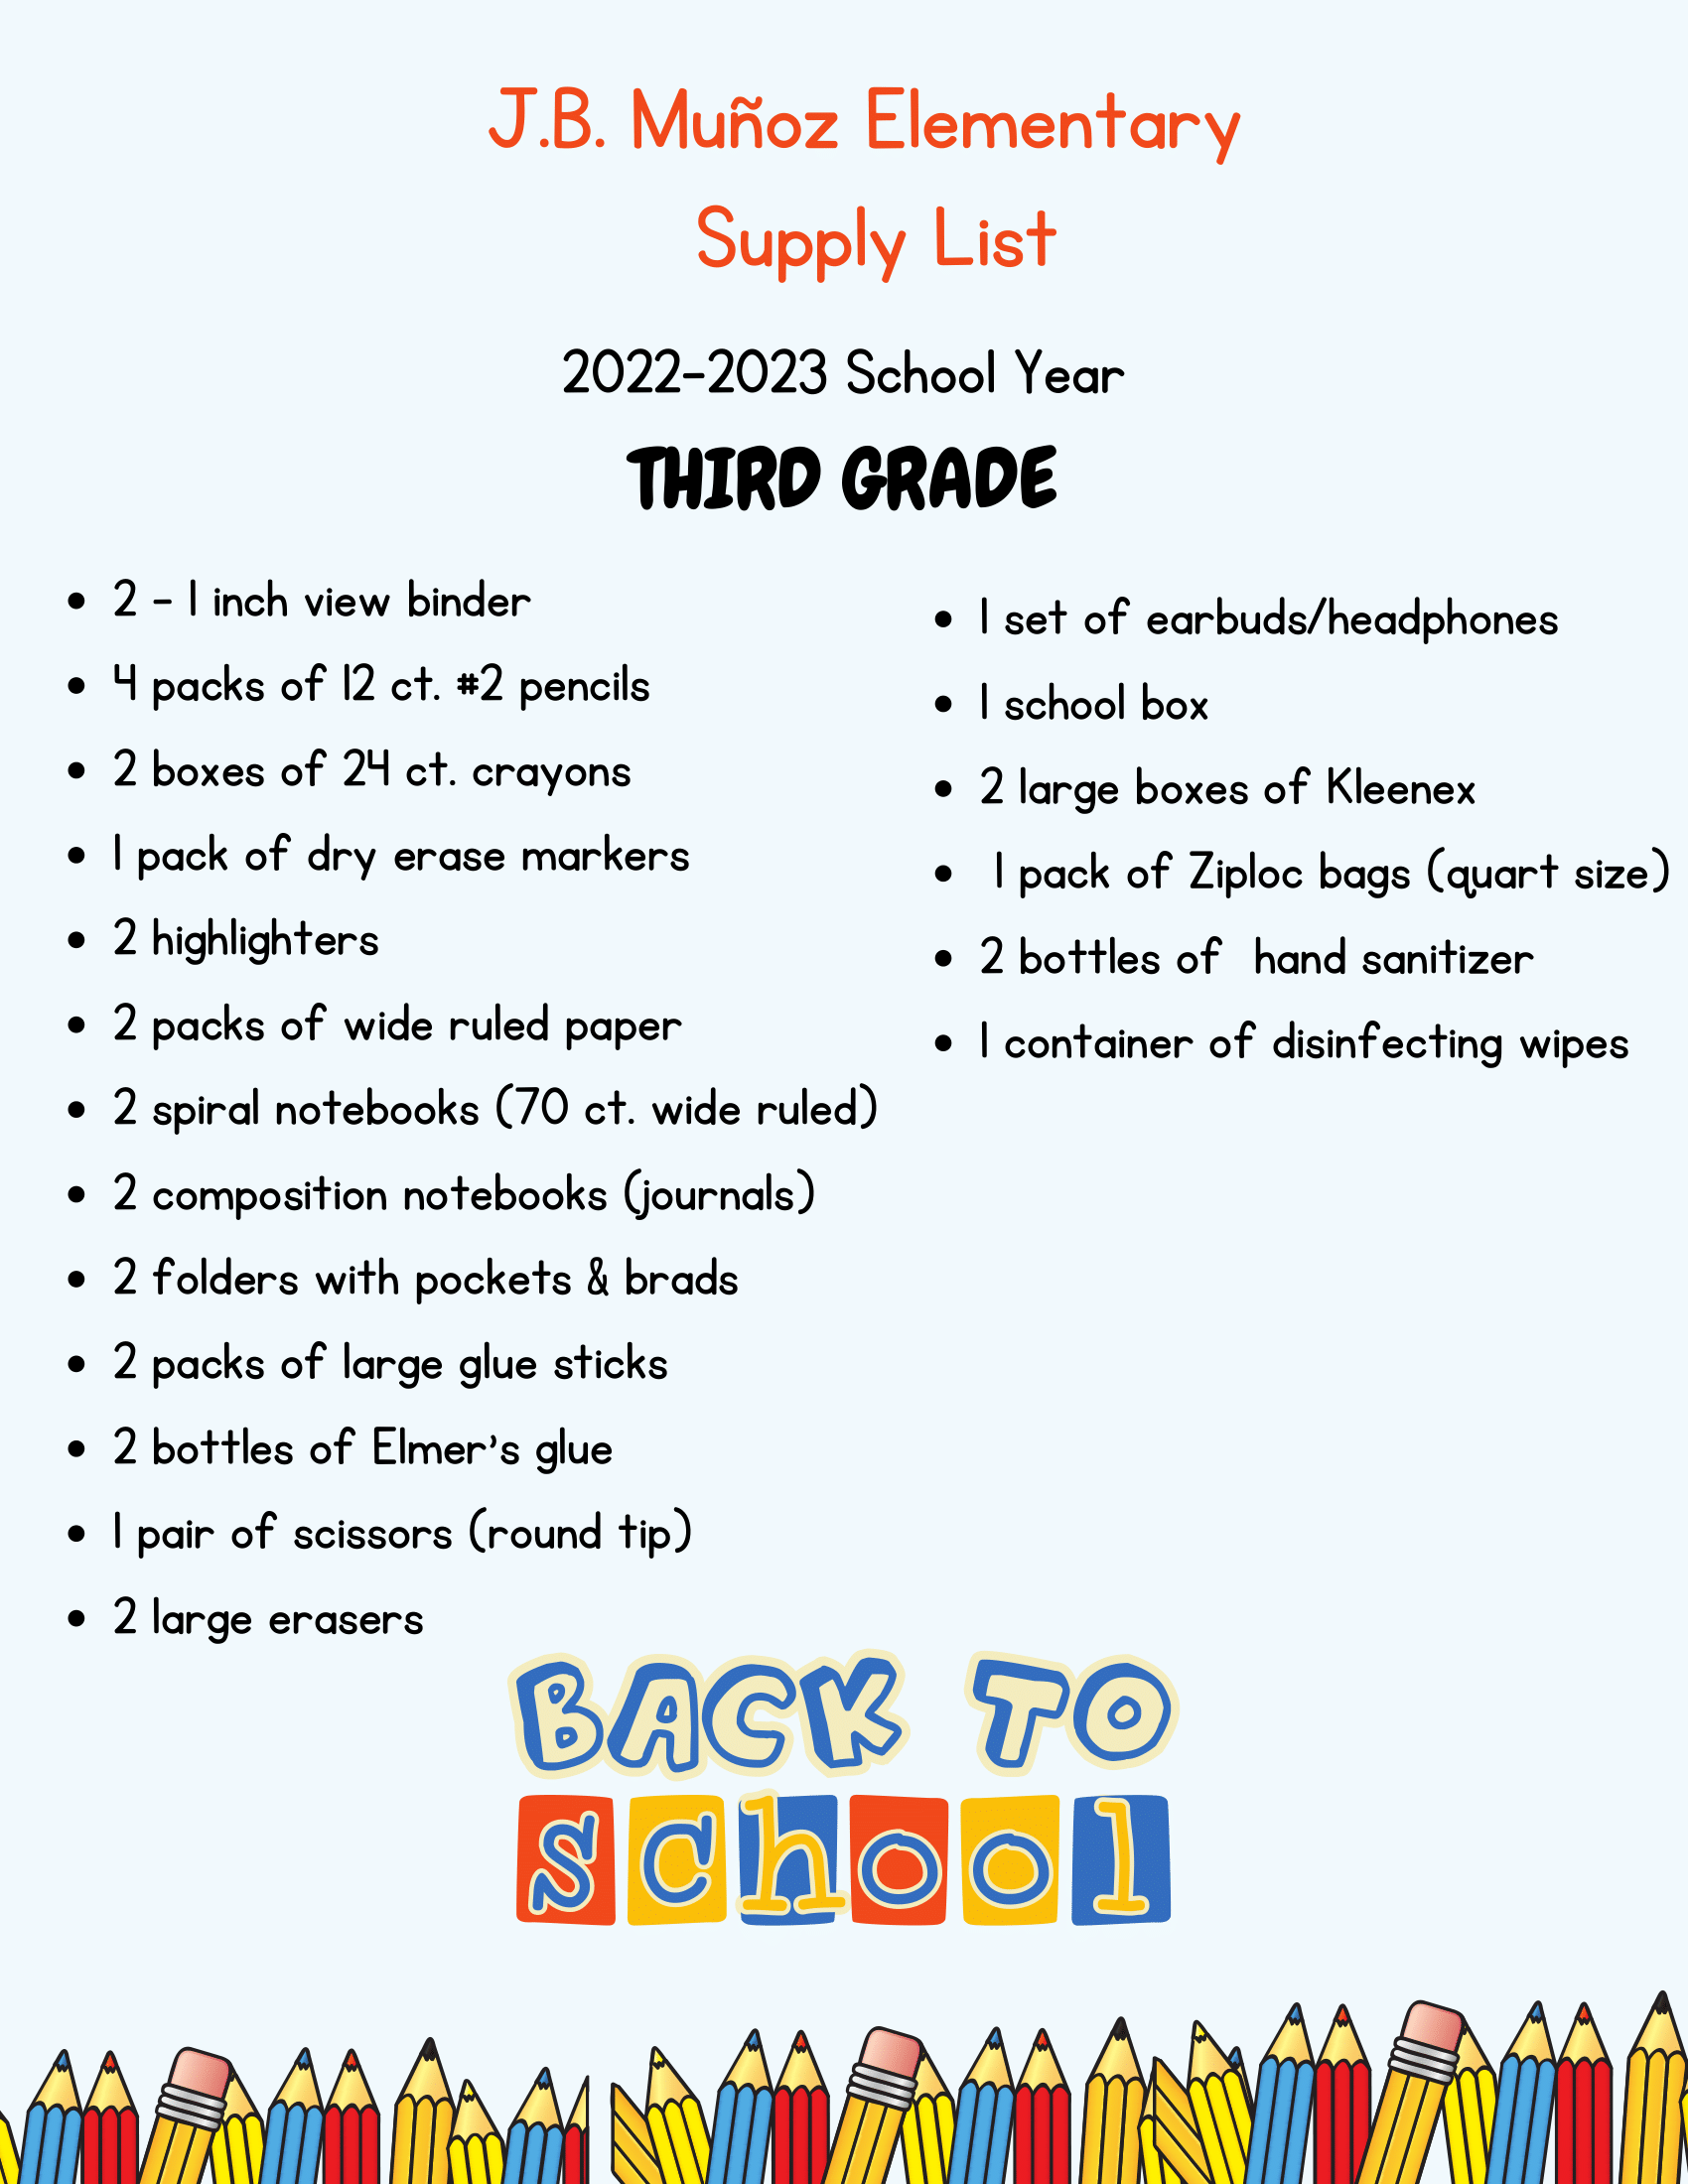 Third grade school supply list